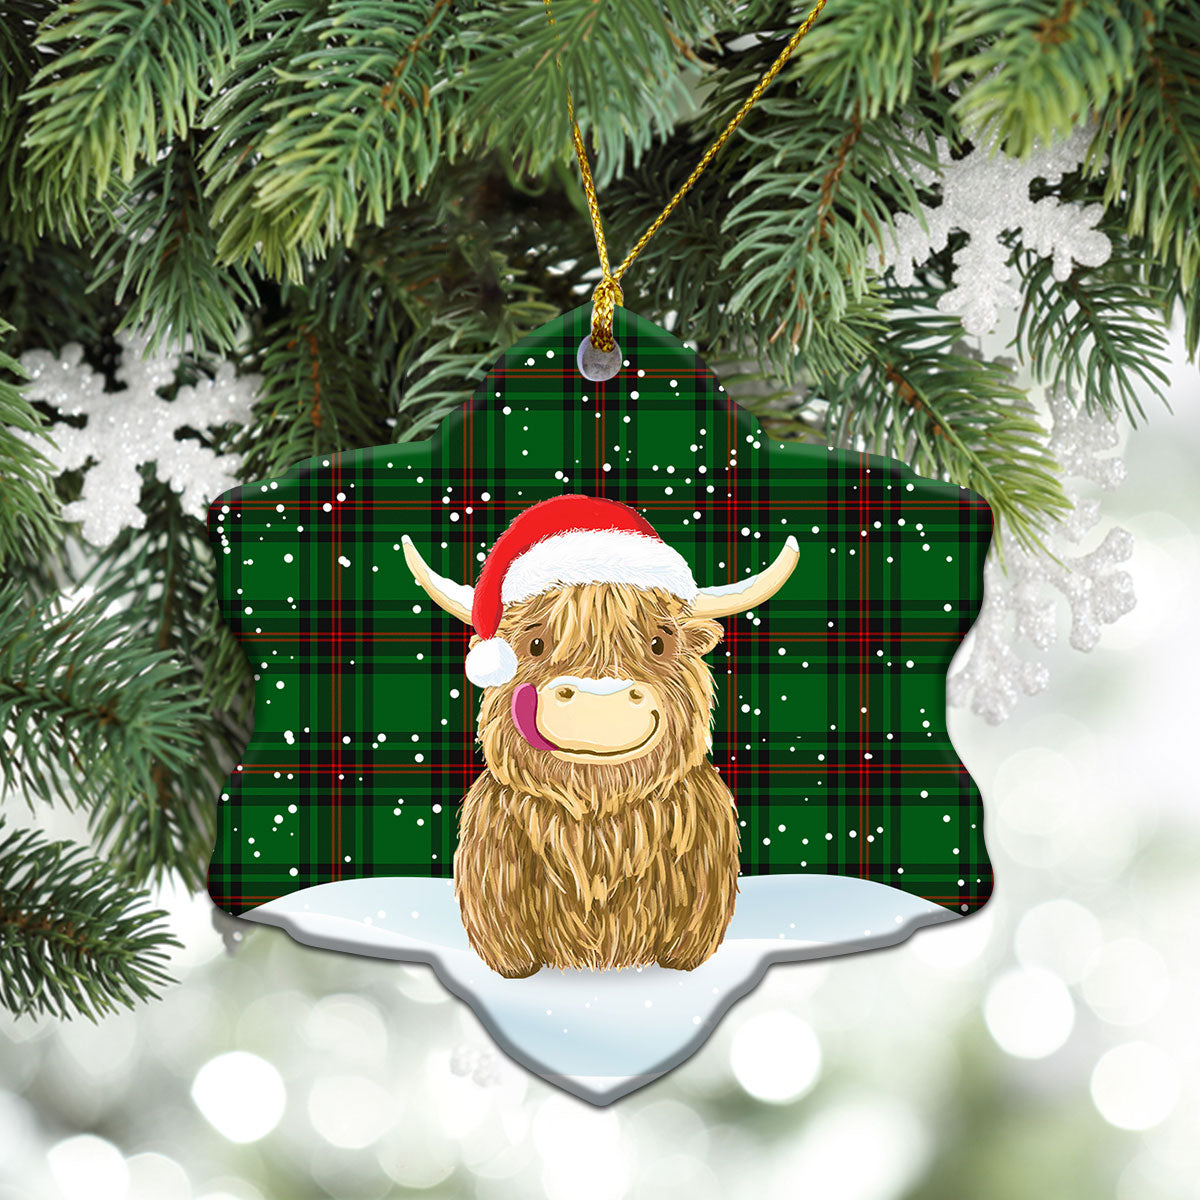 Beveridge Tartan Christmas Ceramic Ornament - Highland Cows Style